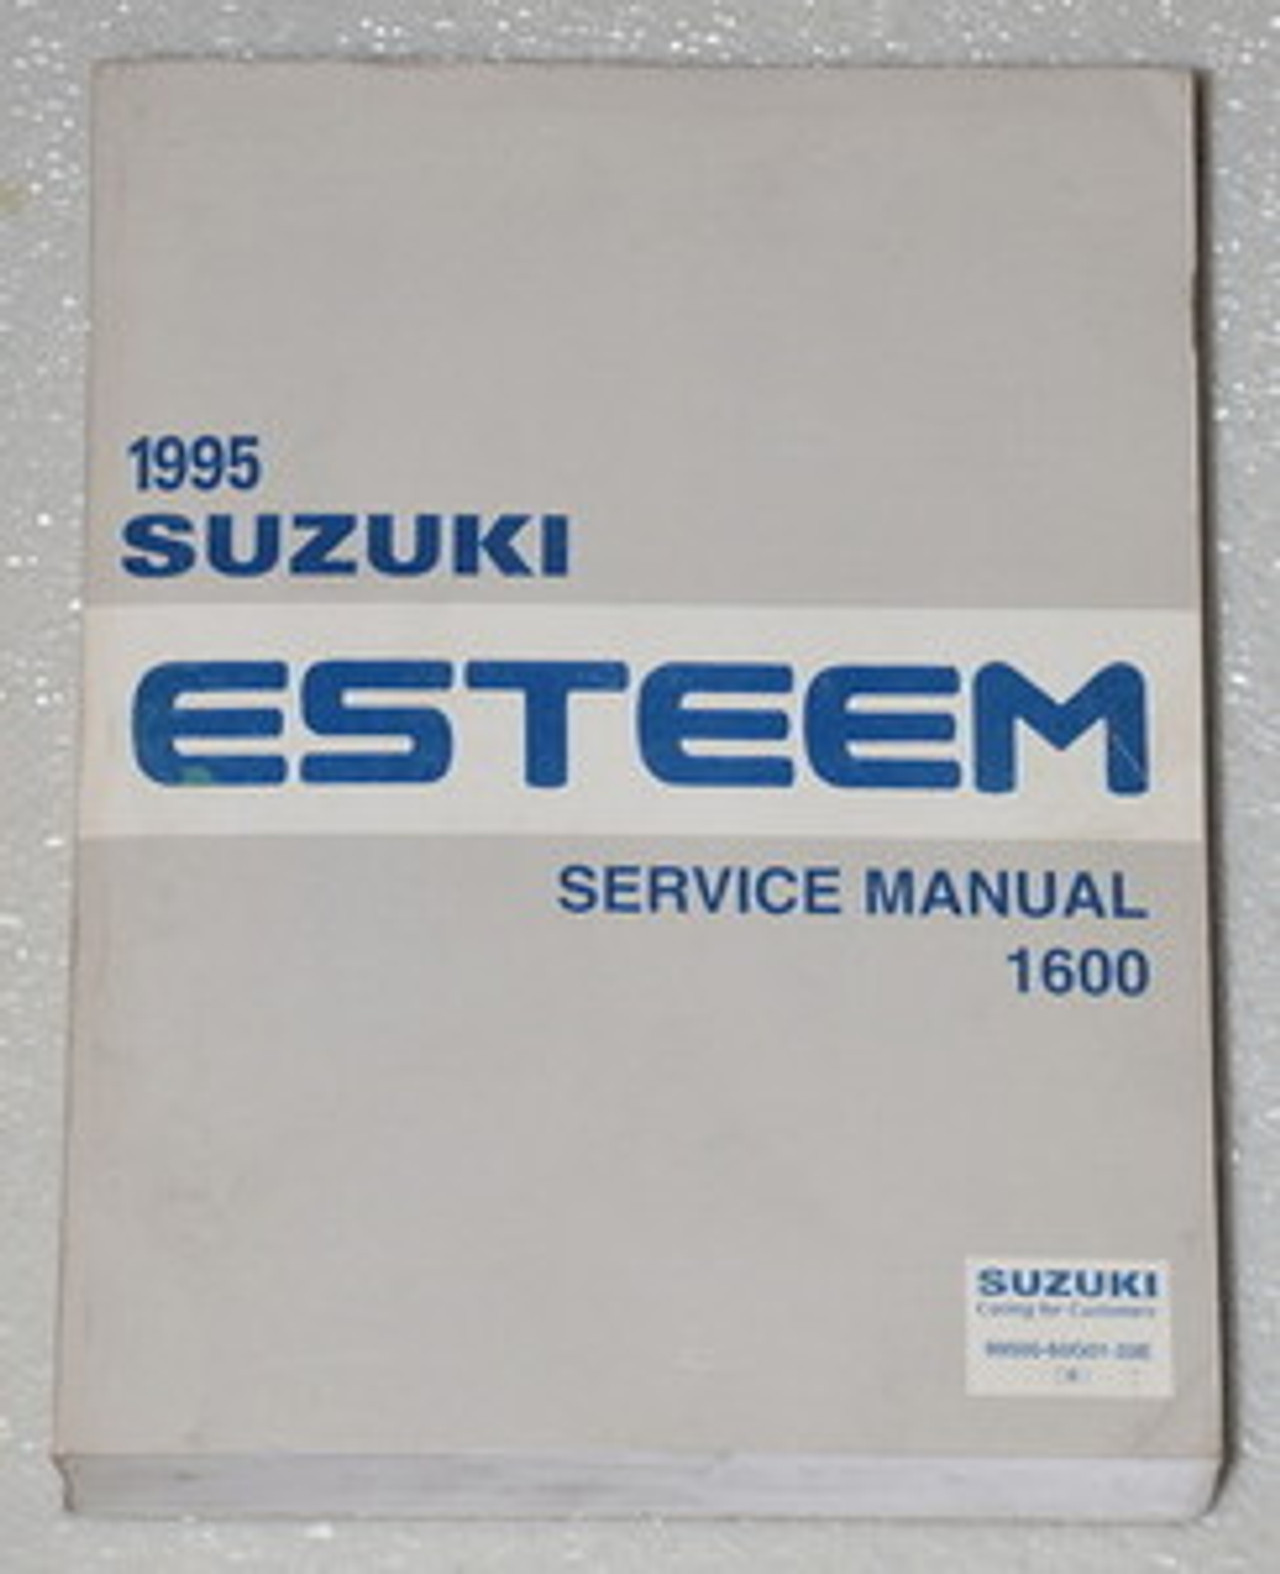 Suzuki Service Manuals Original Shop Books | Factory Repair Manuals